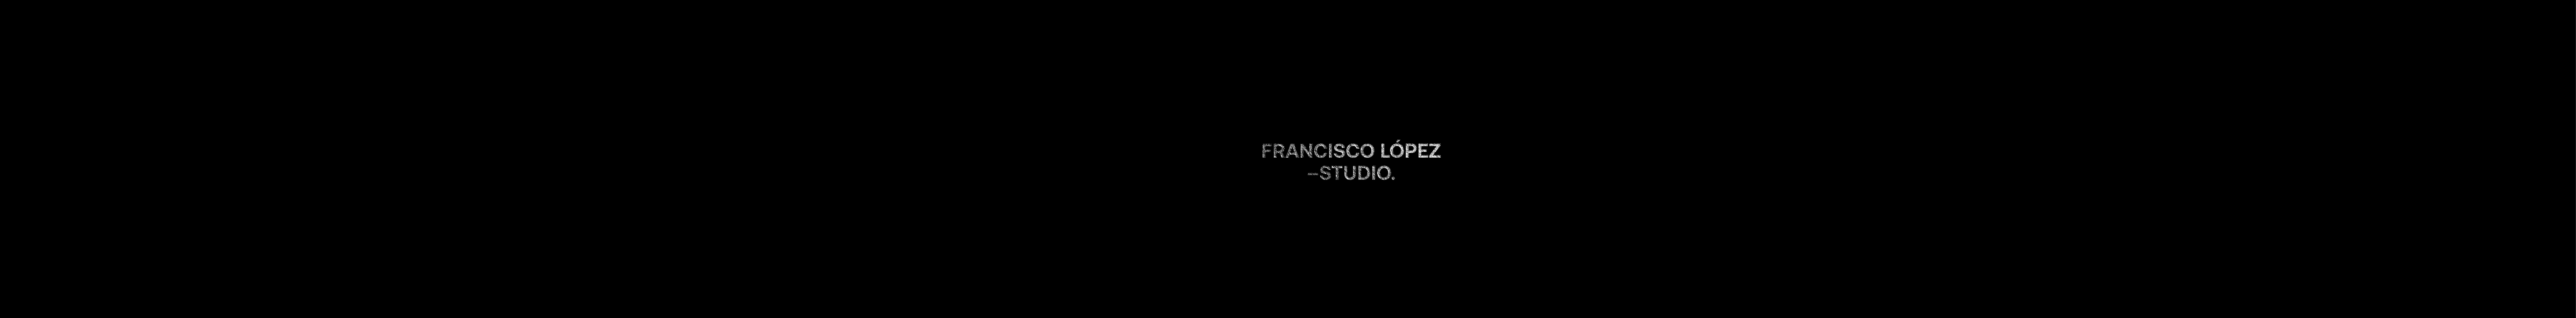 FRANCISCO LOPEZ's profile banner